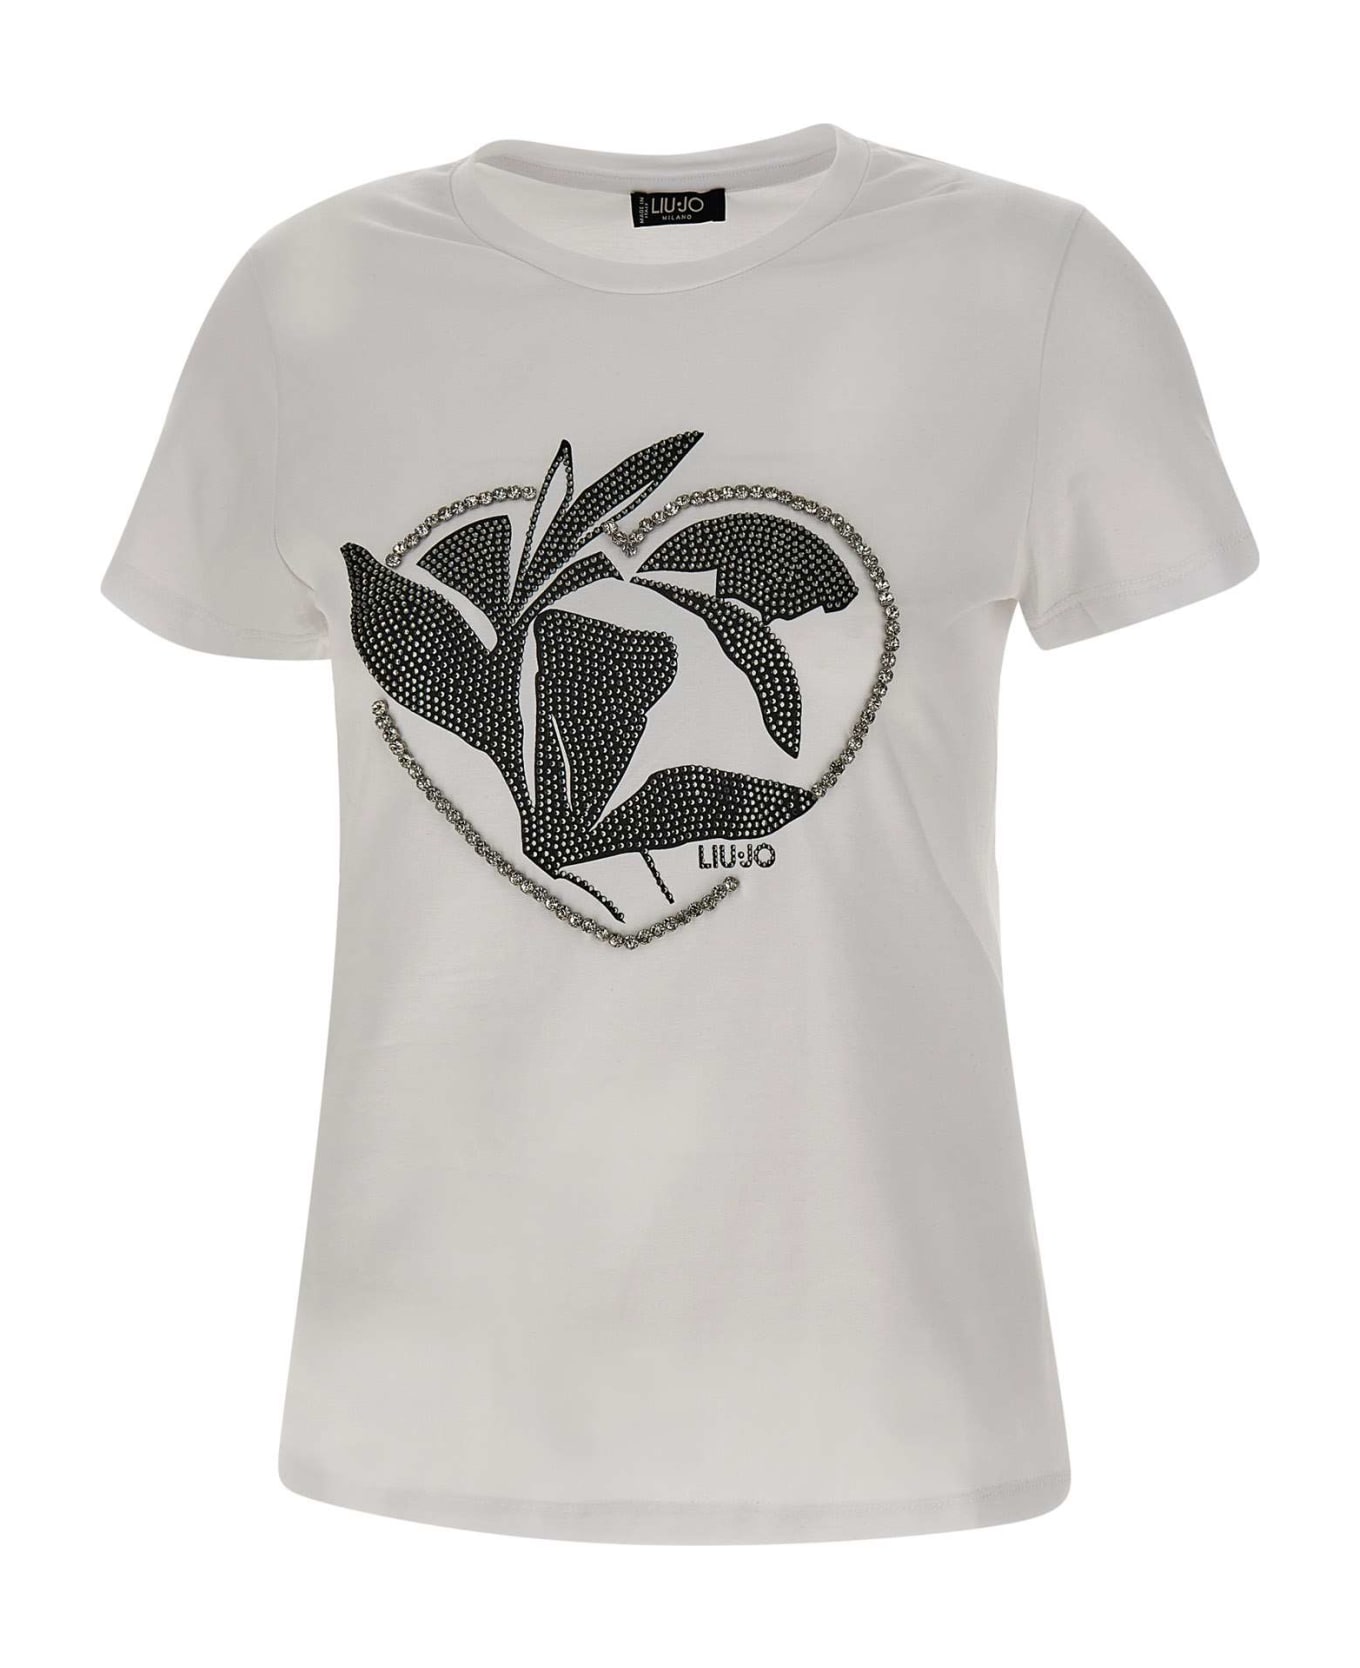 Liu-Jo "moda" Cotton T-shirt - WHITE Tシャツ